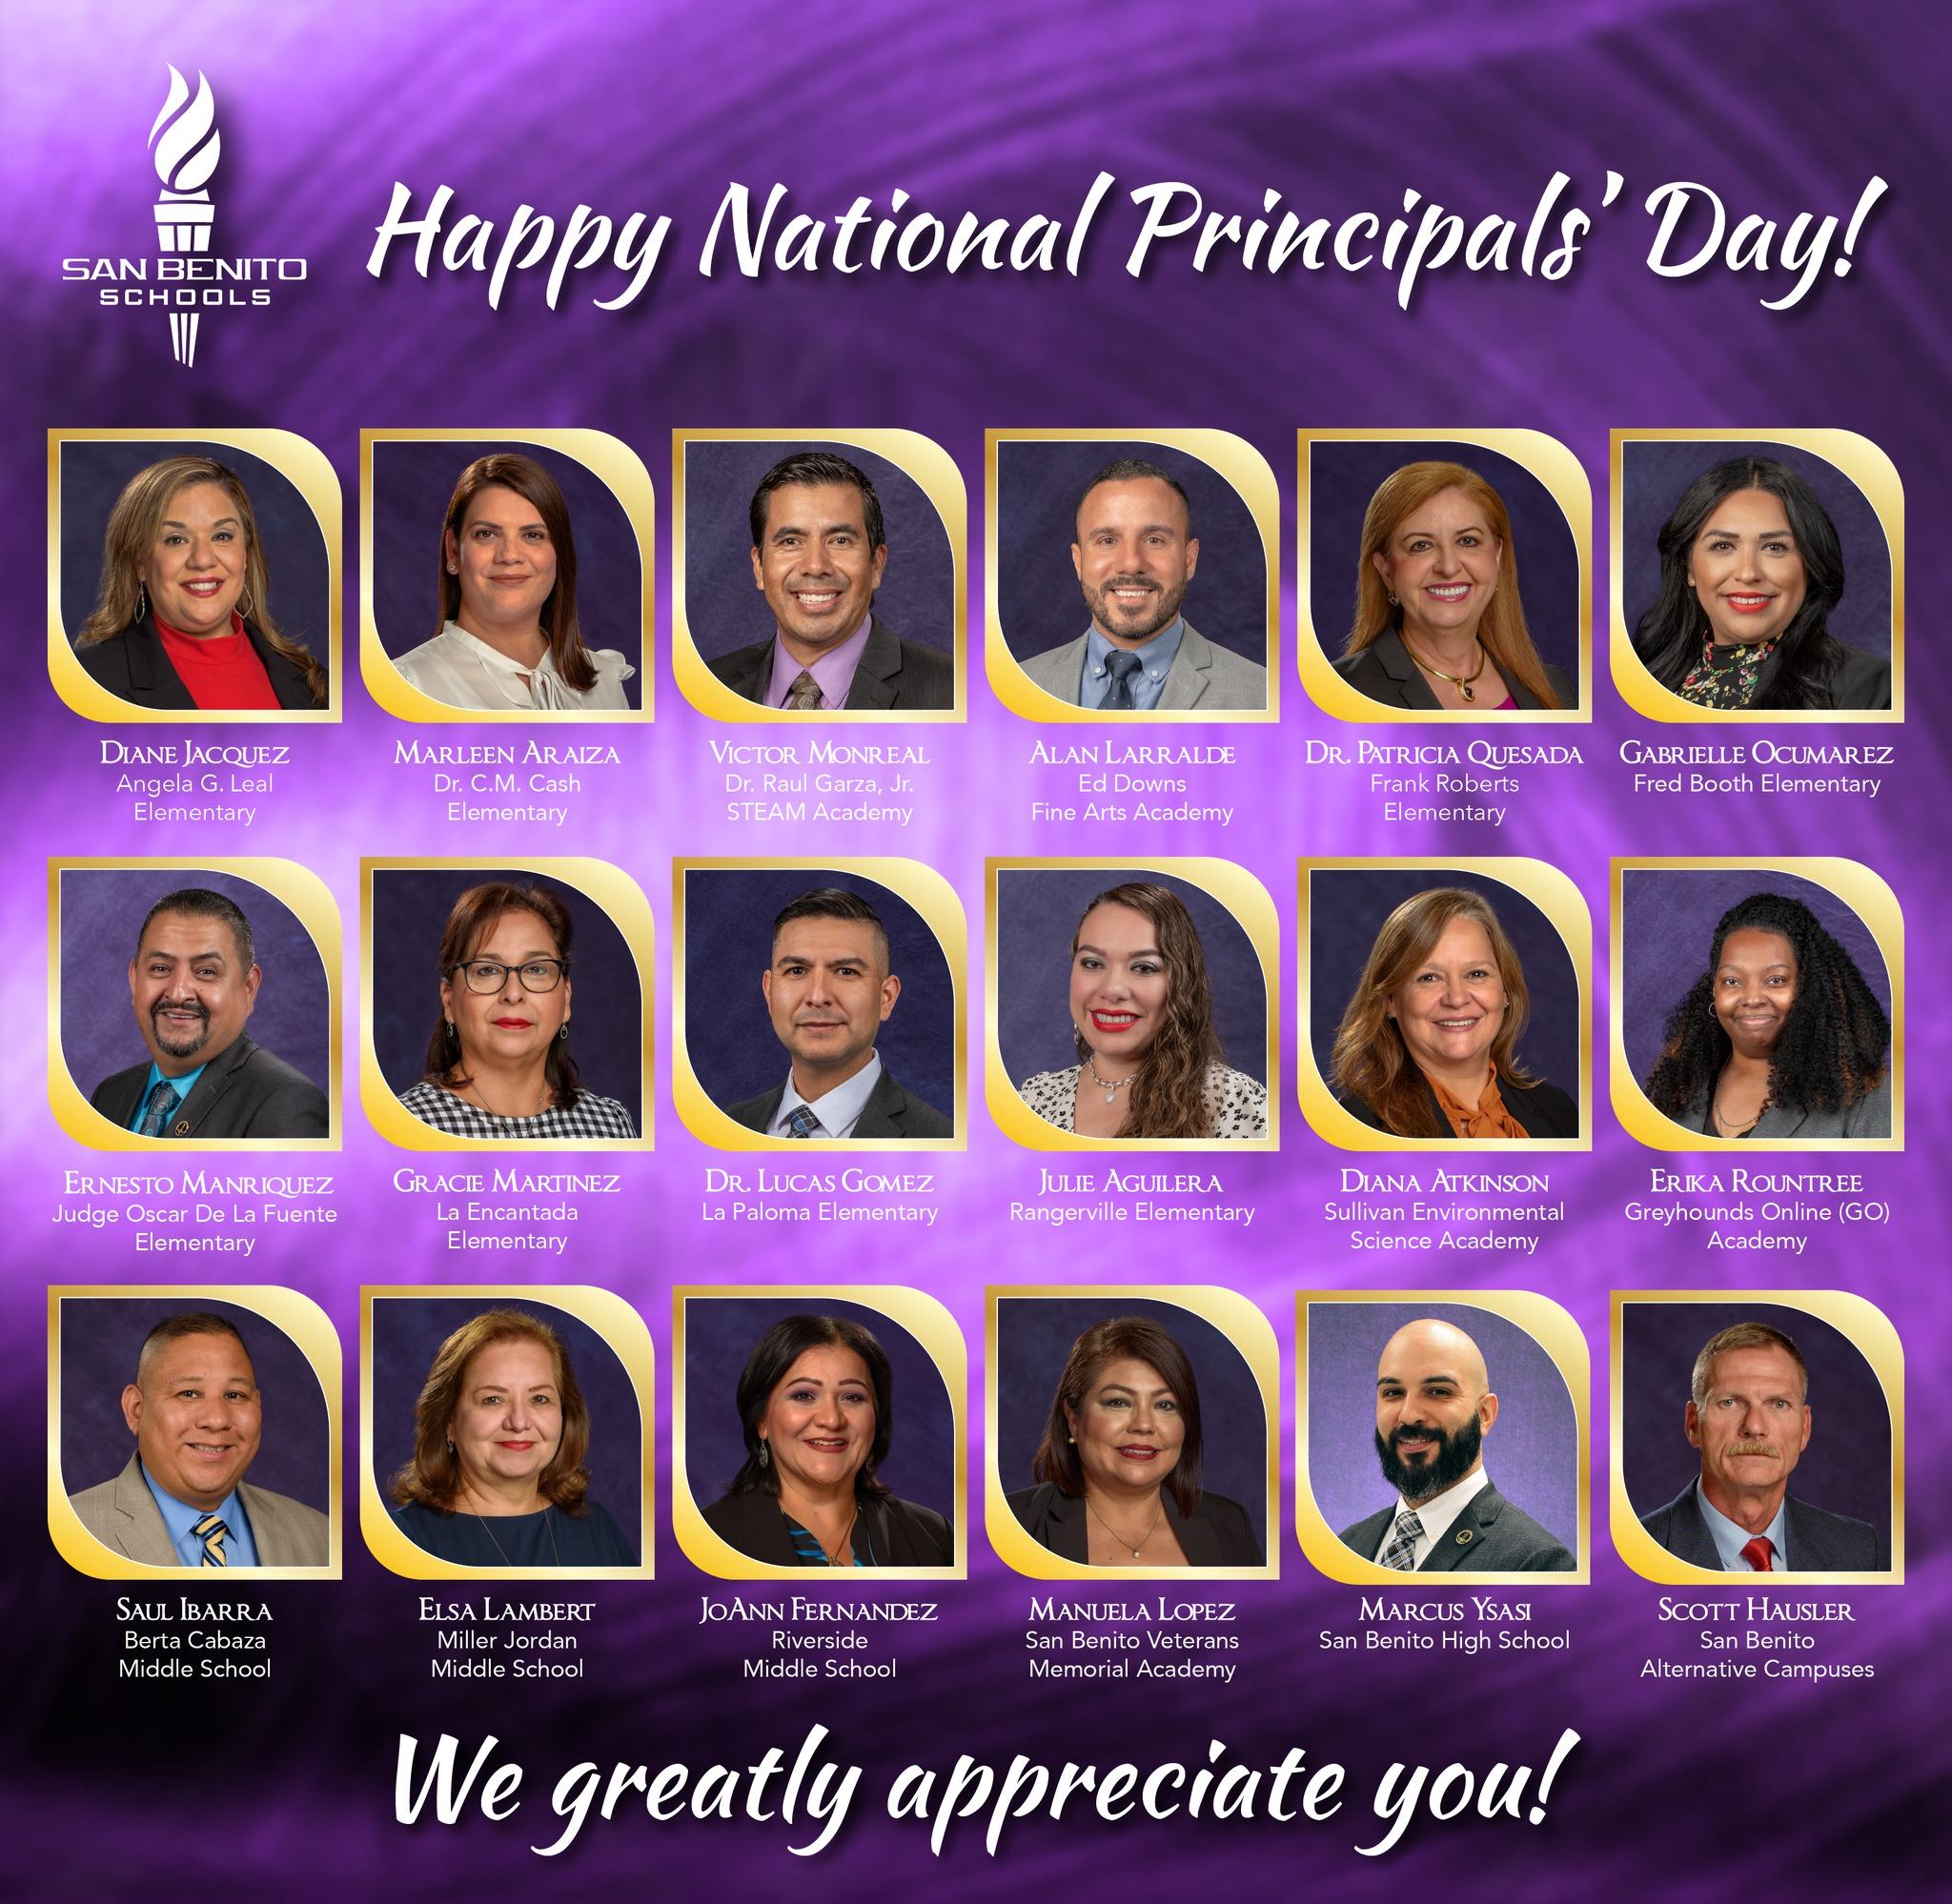 Happy National Principals' Day